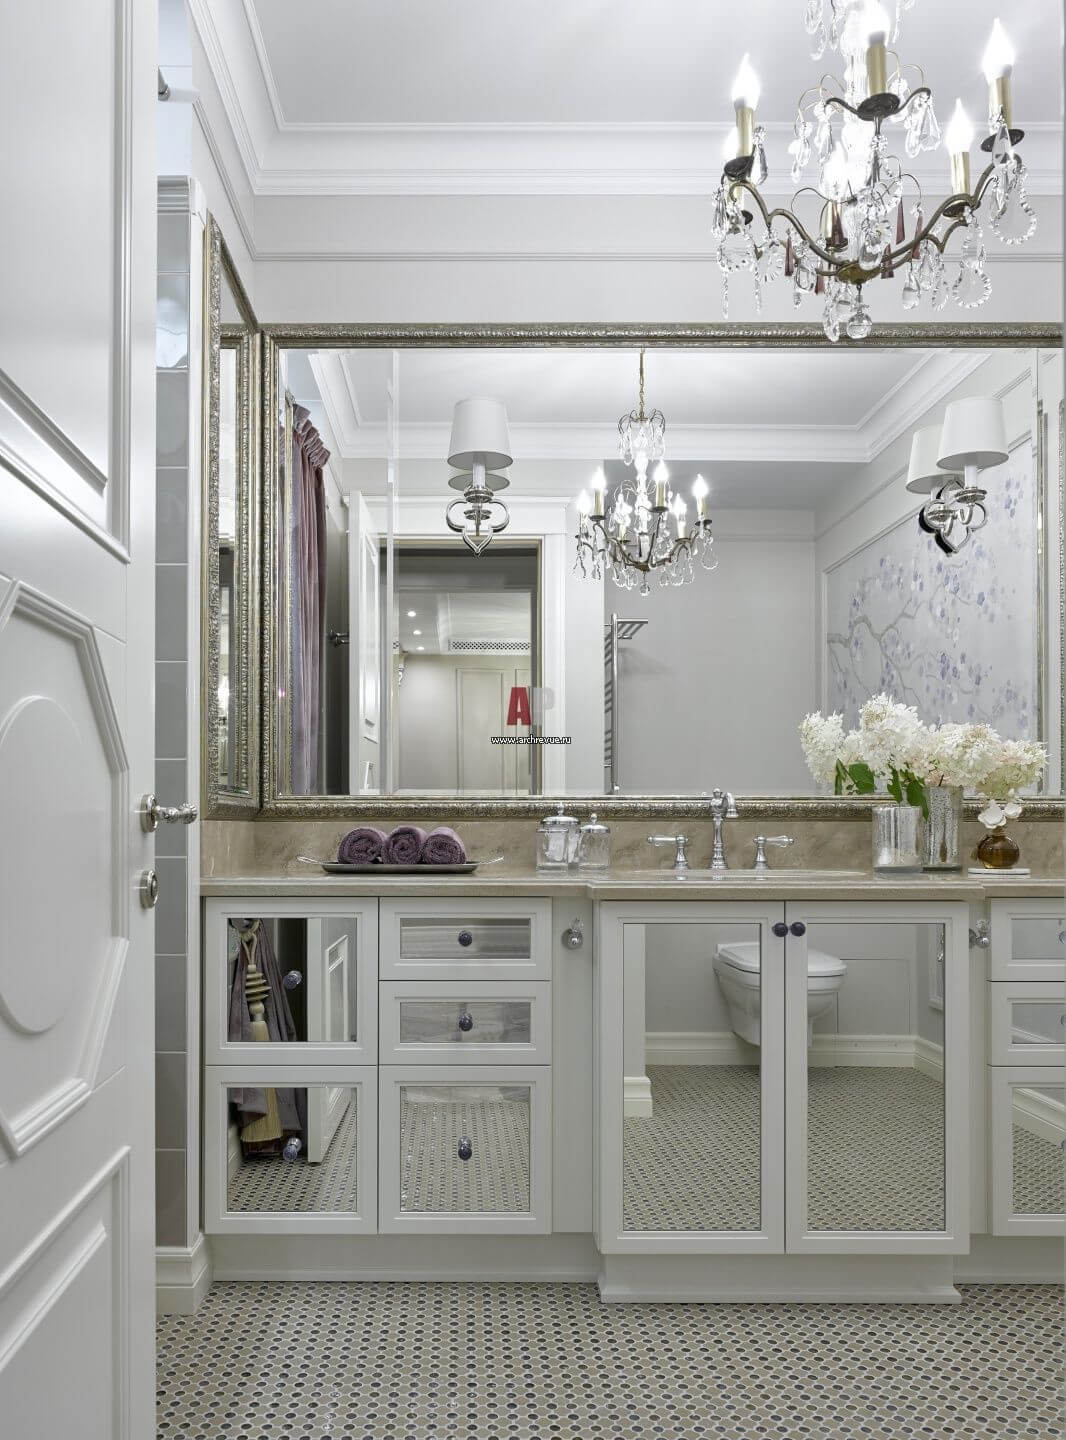 The Mirrored Bathroom Vanity